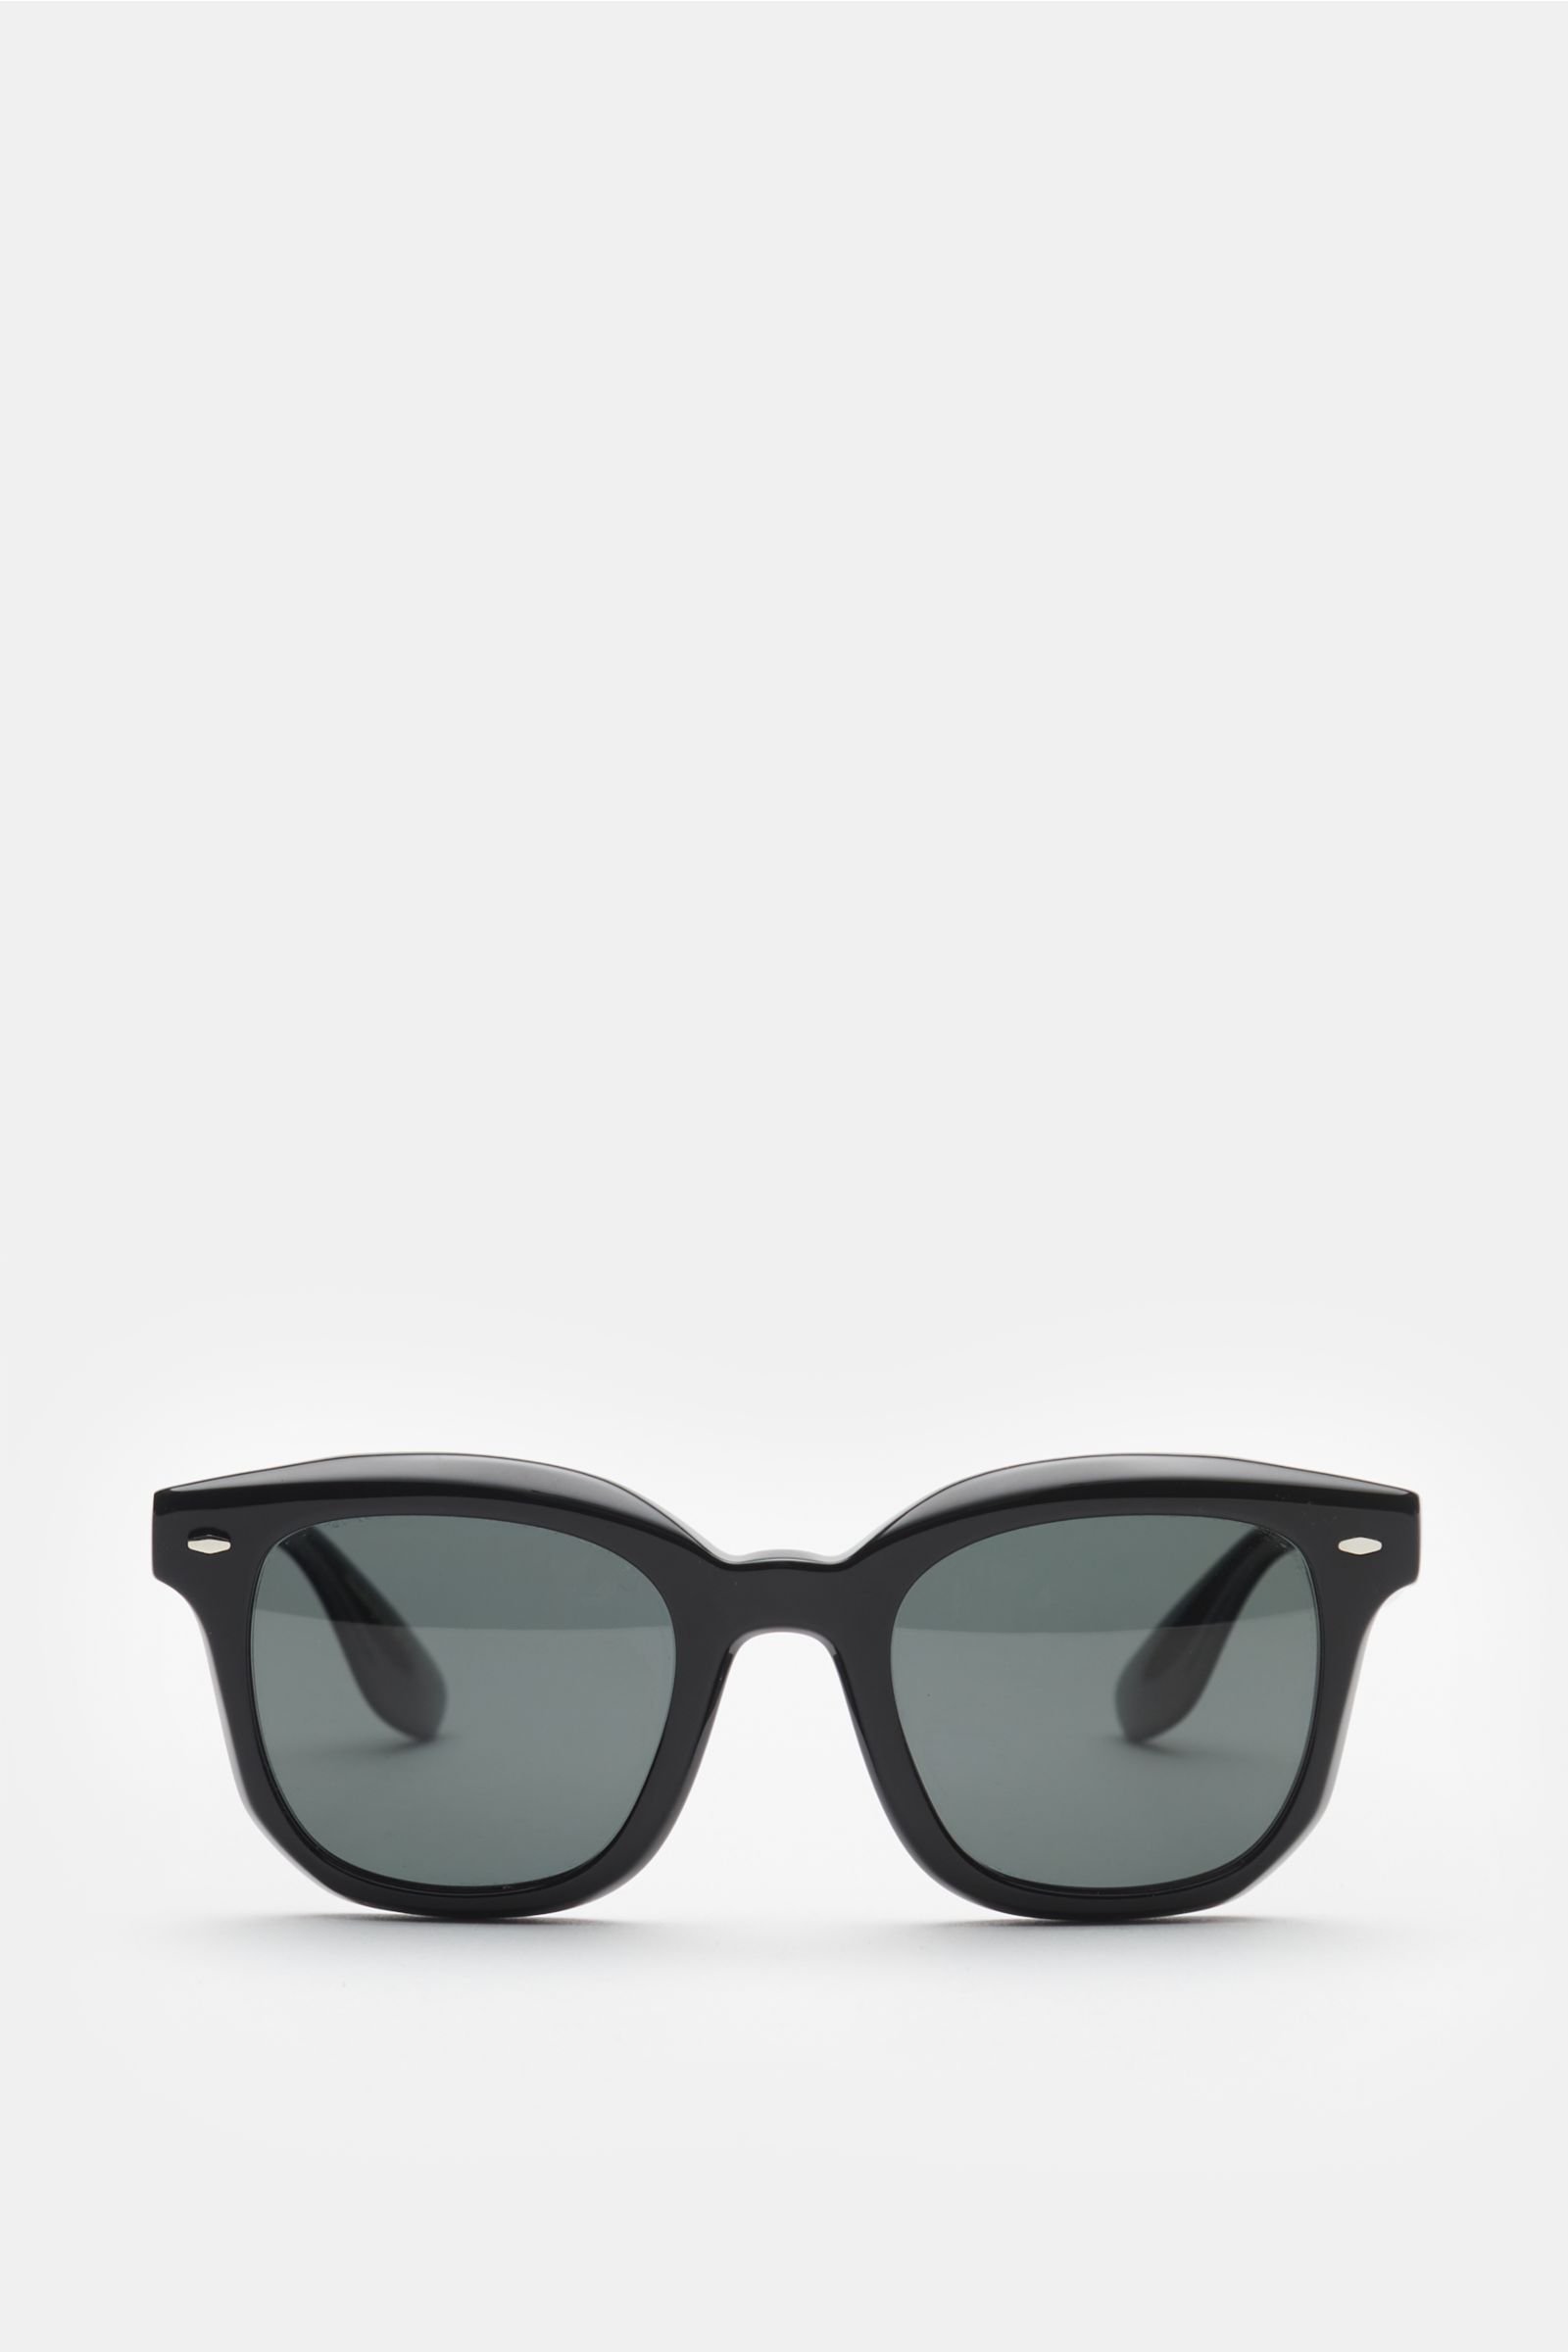 Sunglasses 'Filù' black/grey-blue